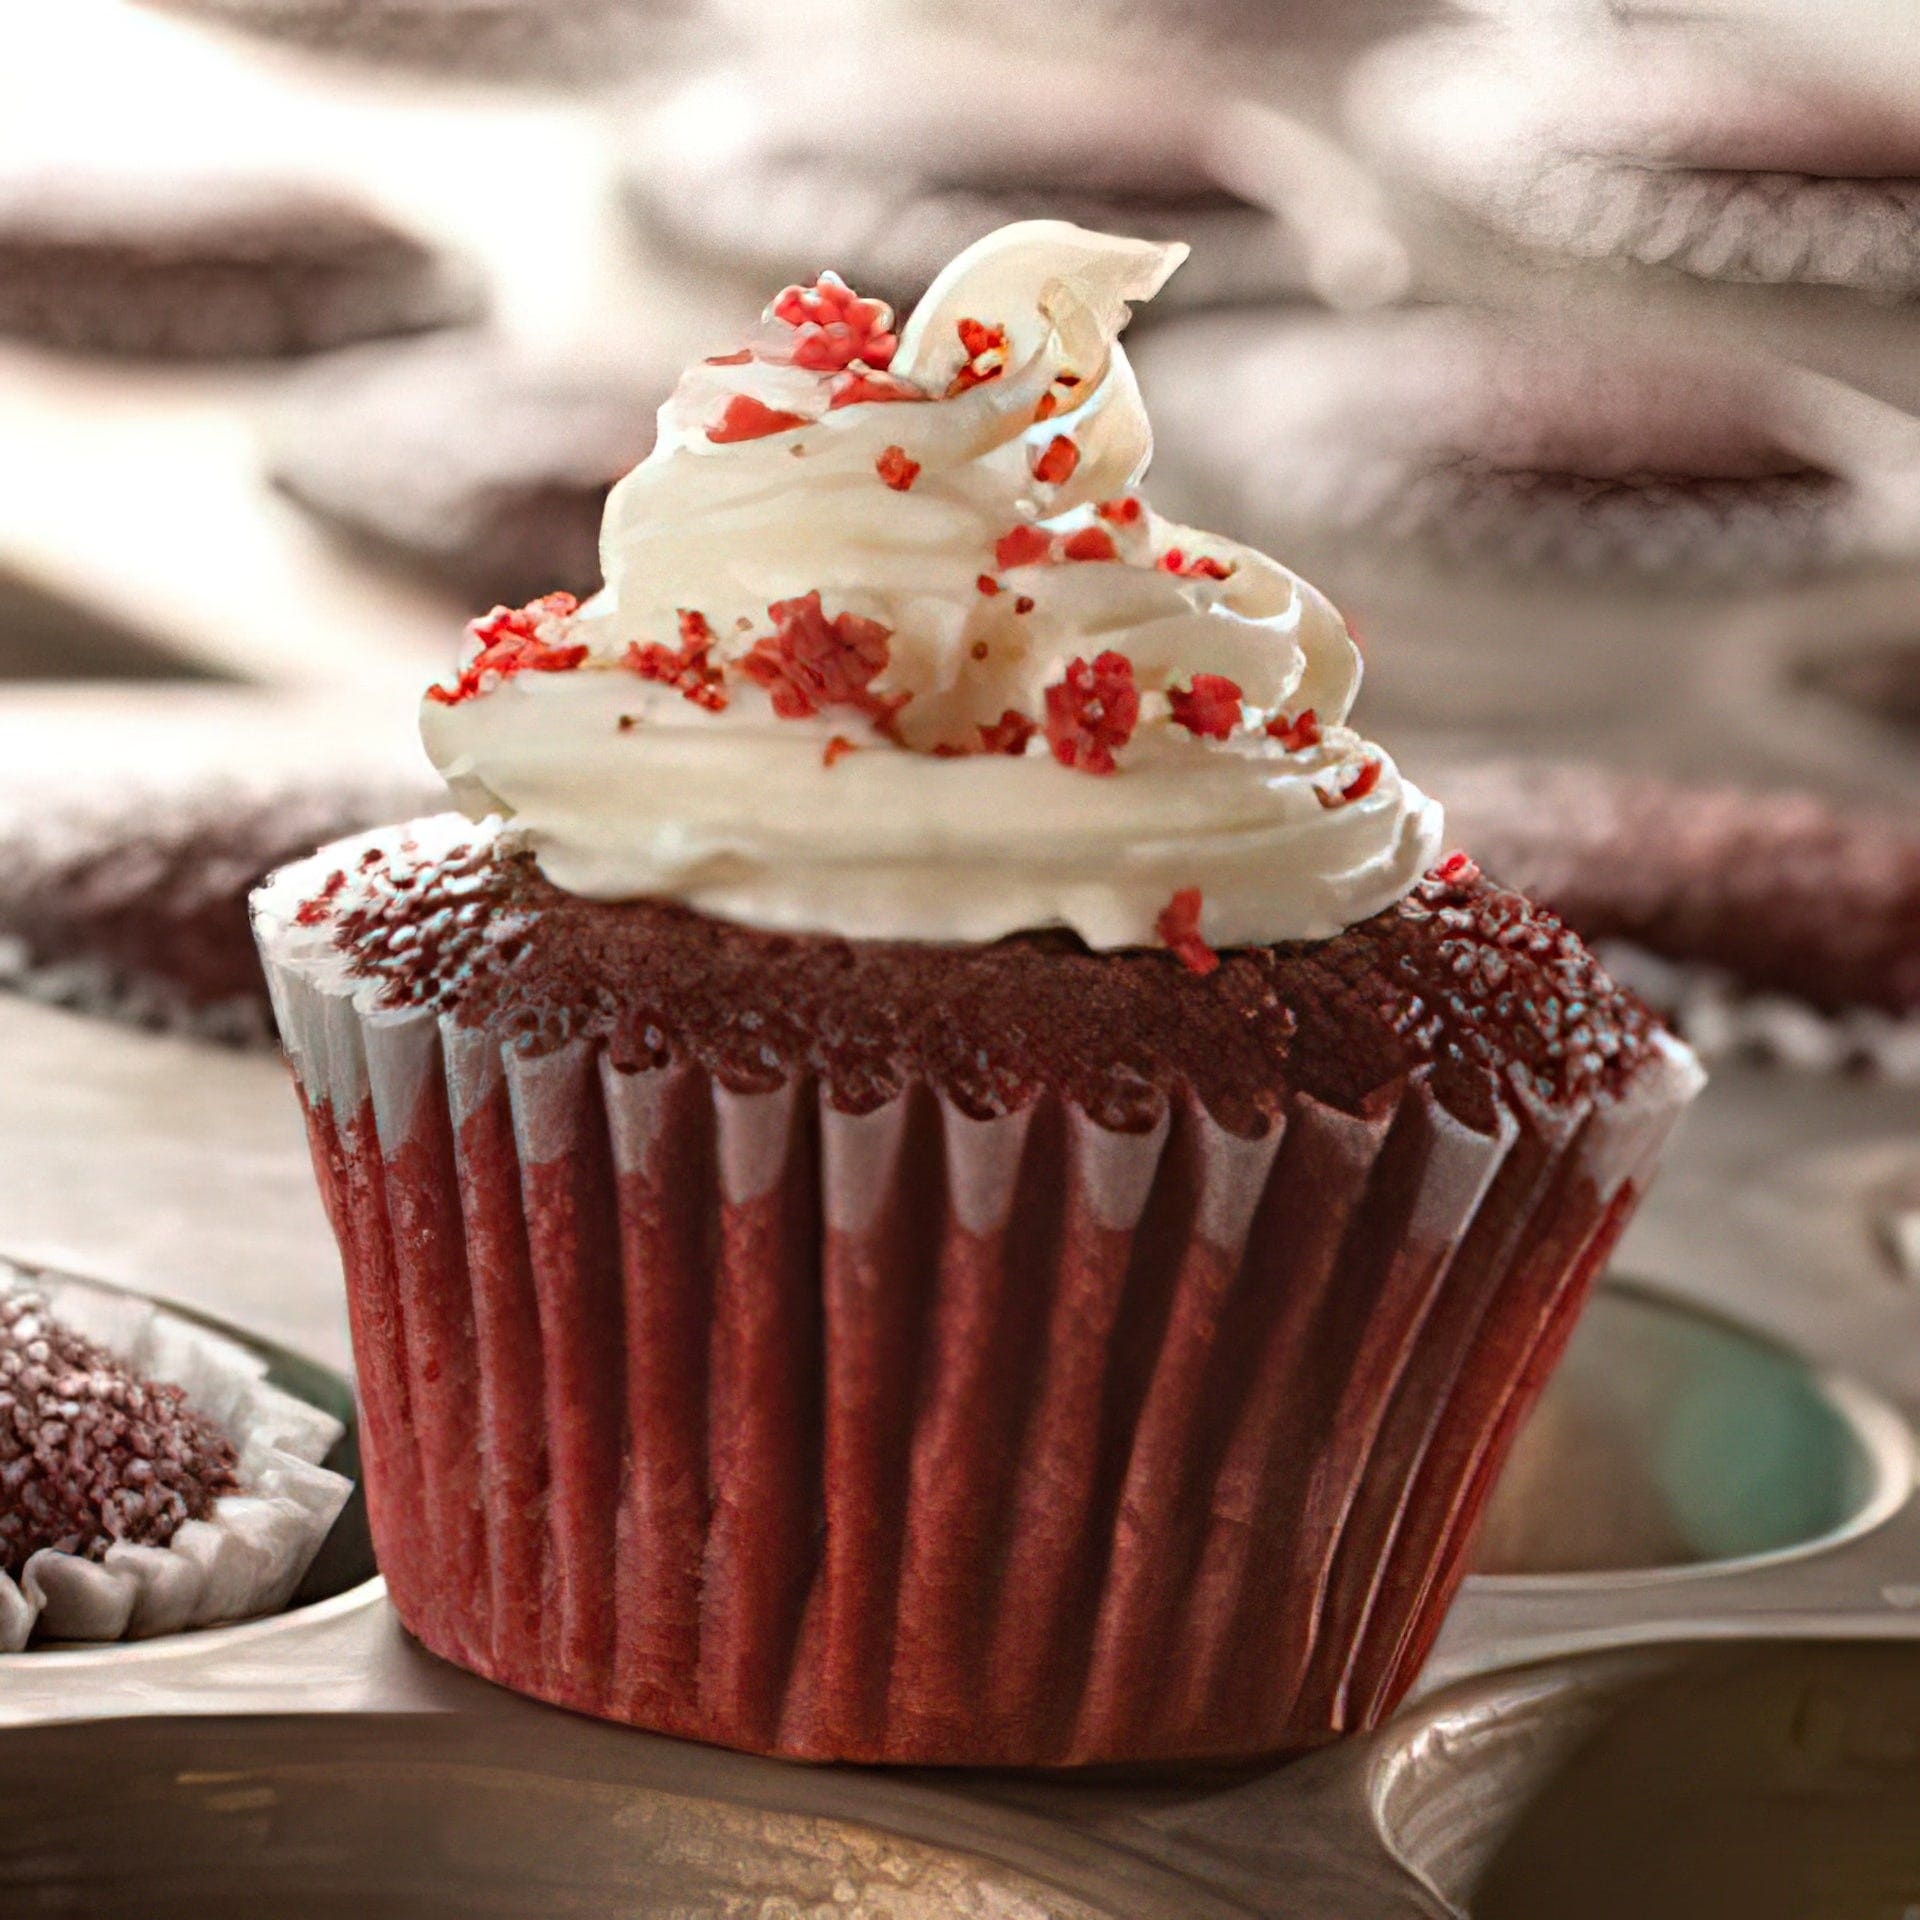 HERSHEY'S Bite-Size Red Velvet Cupcakes